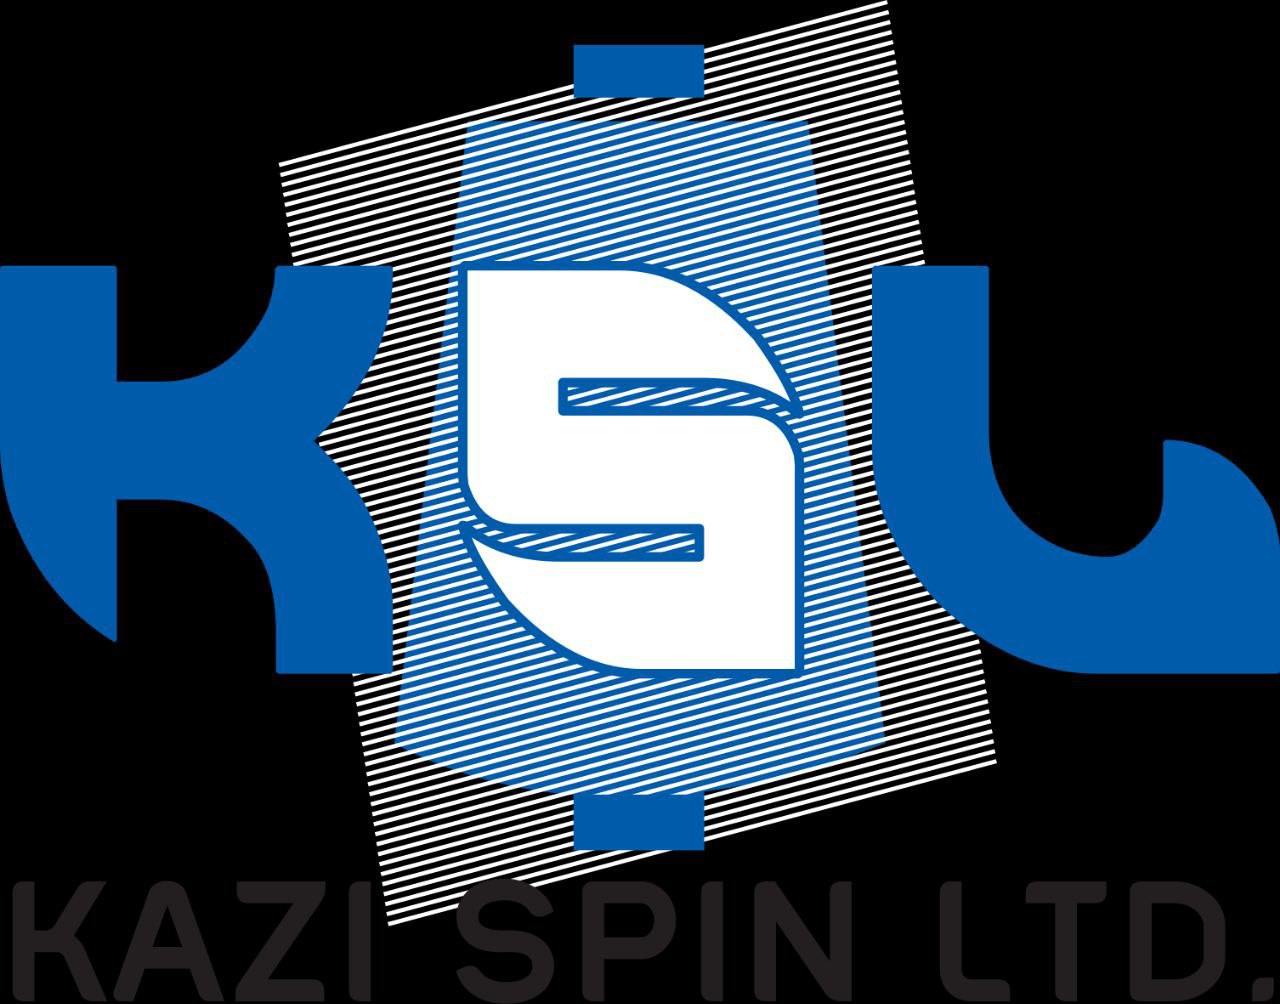 KaziSpin